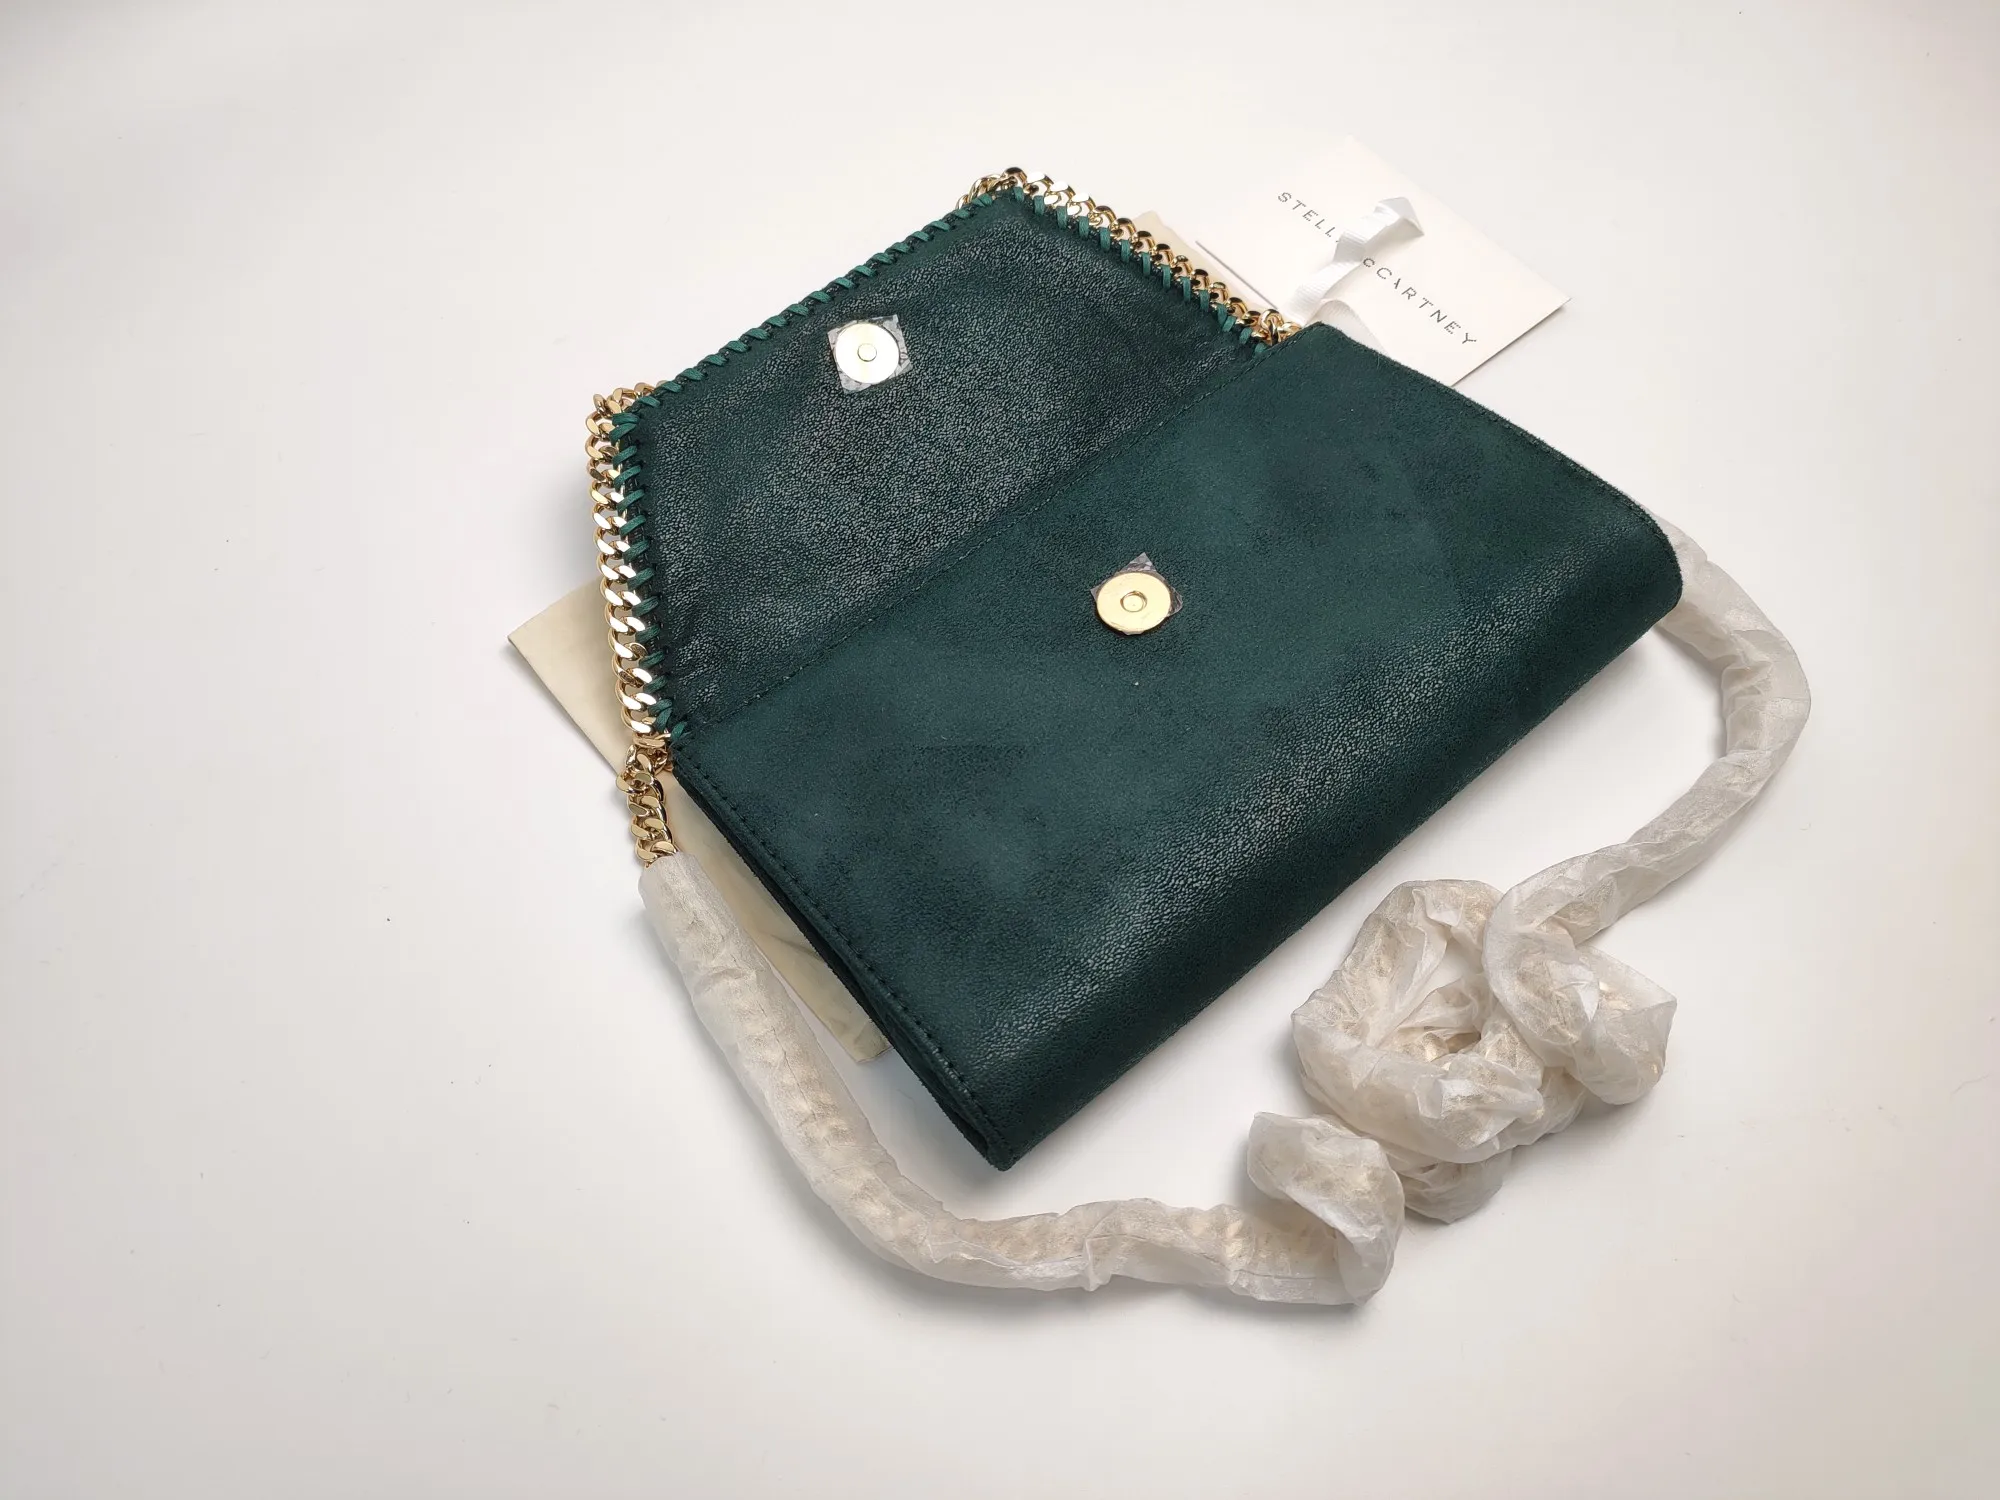 10A New Fashion women Handbag shoulder bag Stella McCartney PVC high quality leather shopping bag